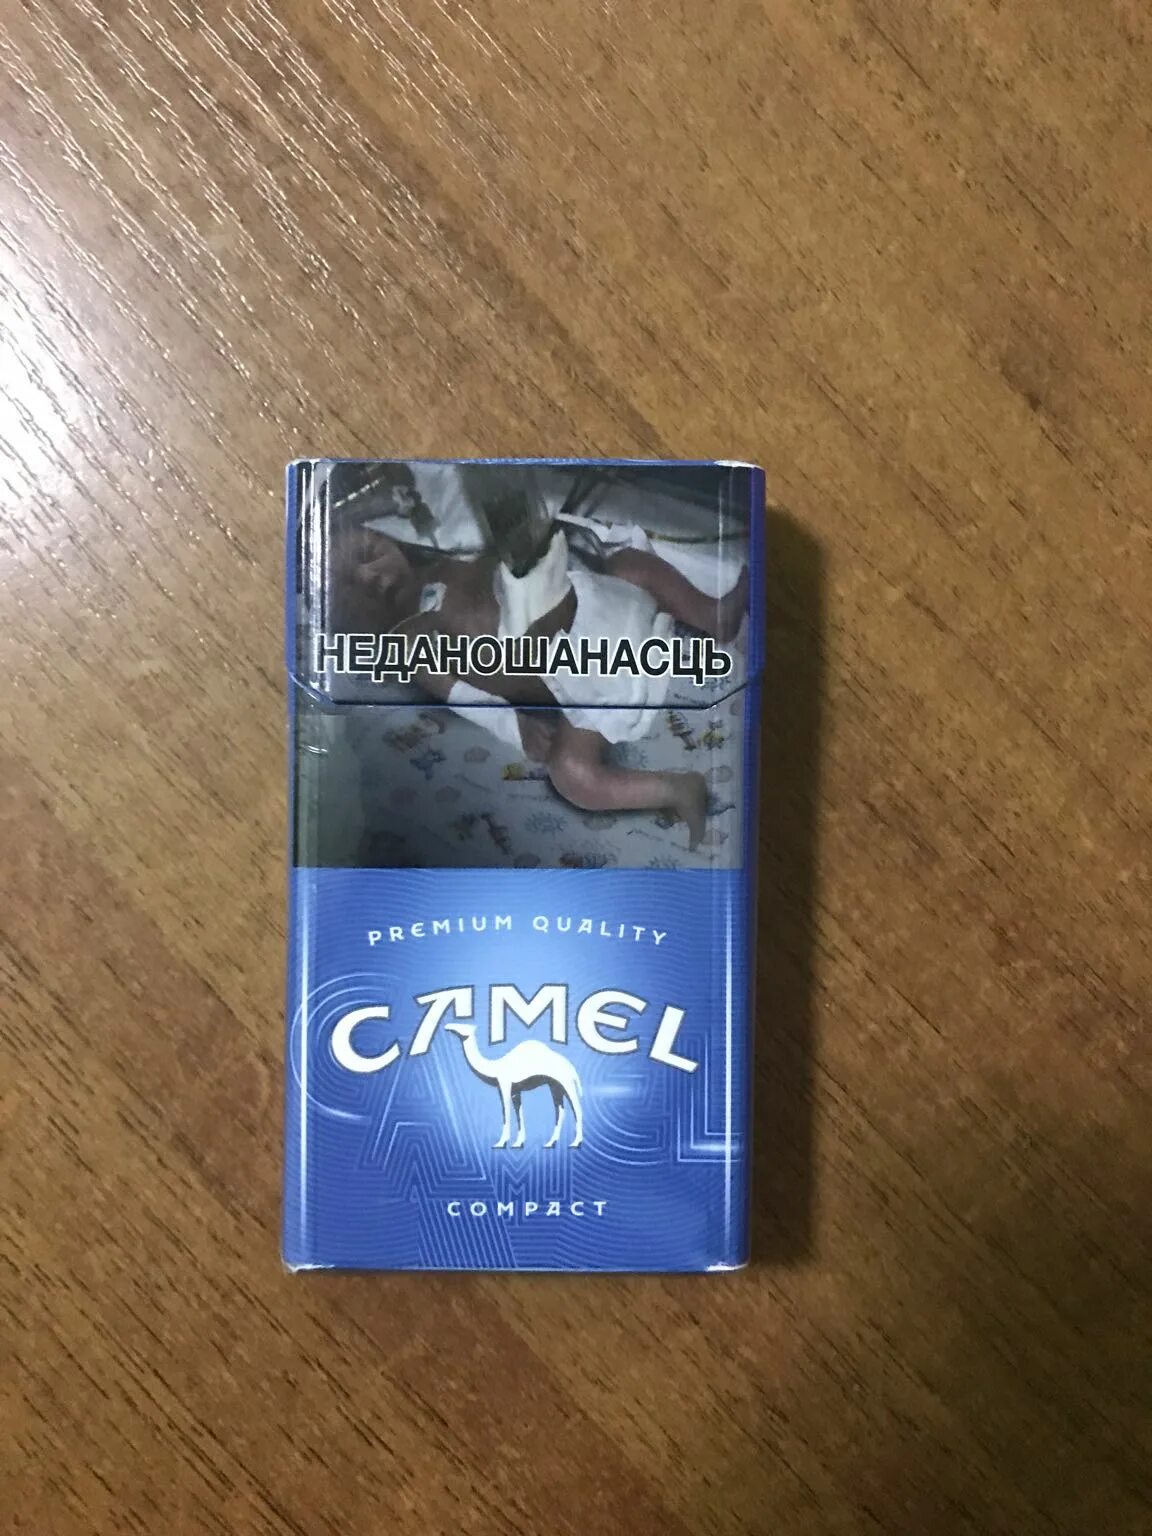 Кемал компакт. Кэмэл компакт синий сигареты. Camel Compact Blue с кнопкой. Camel сигареты синие компакт. Сигареты Camel Compact Premium.